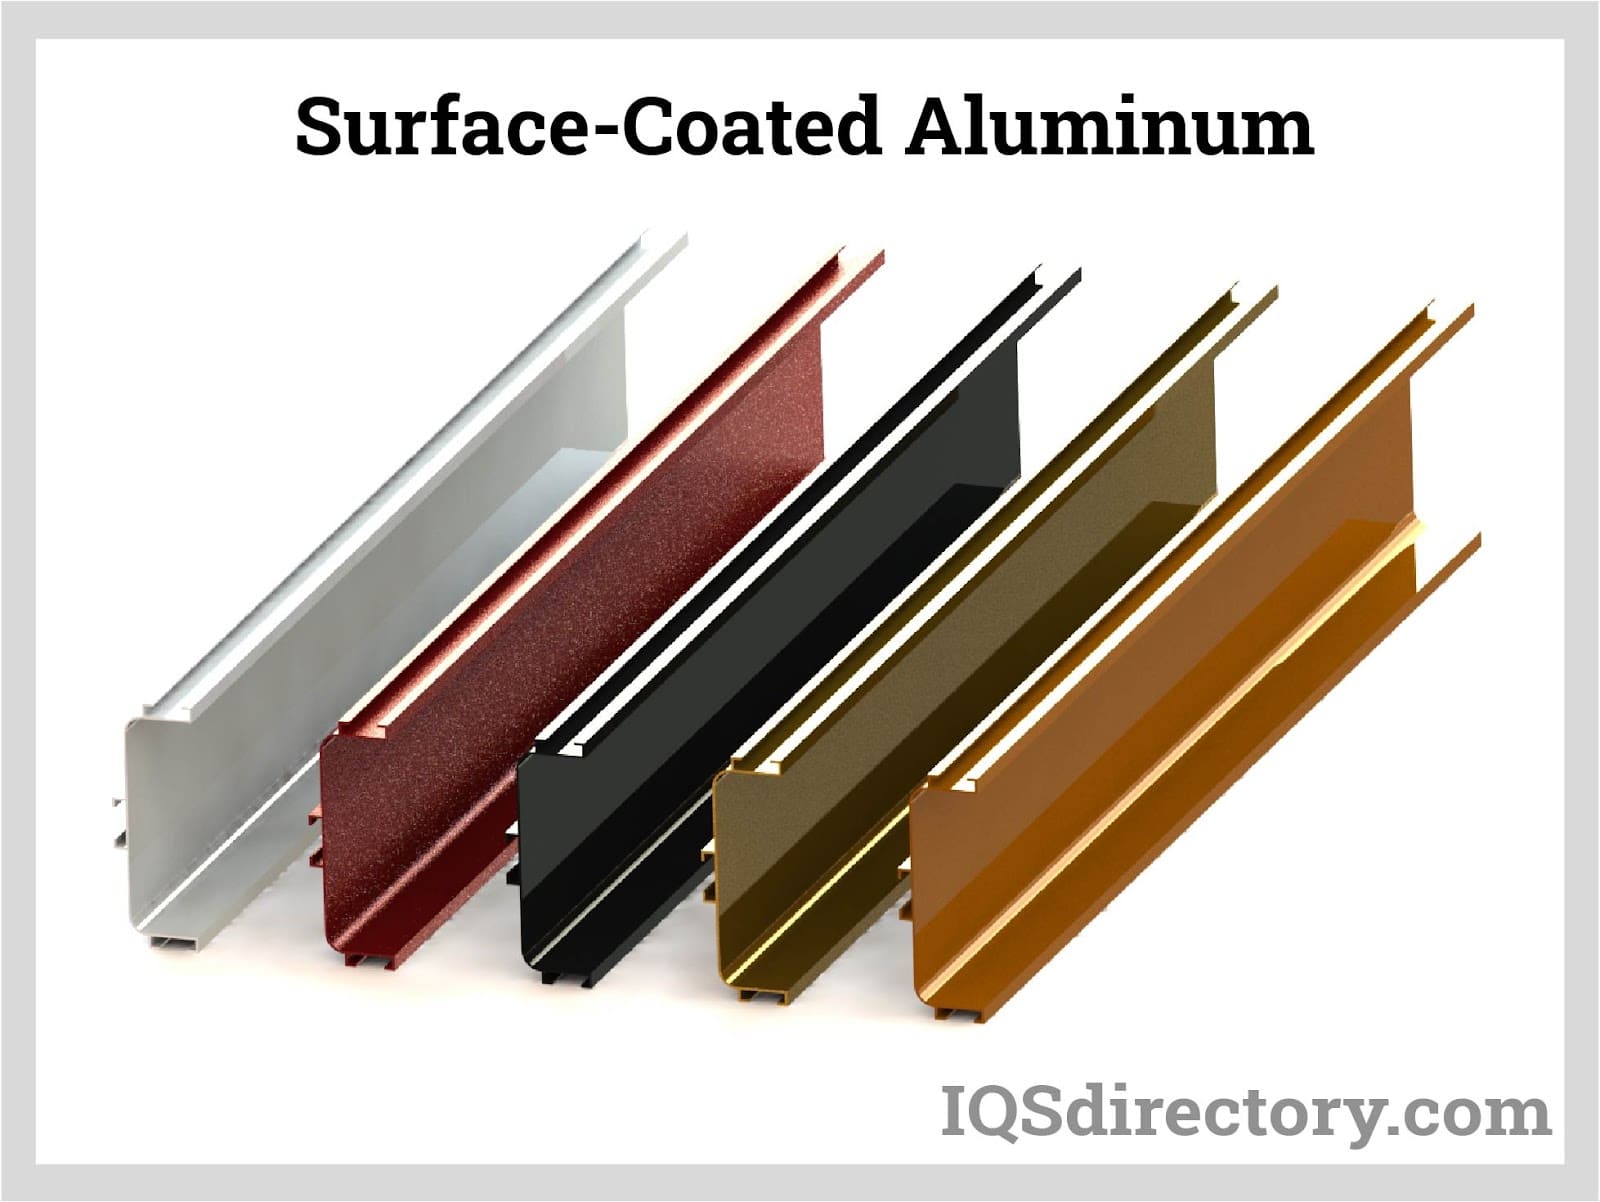 Surface-Coated Aluminum